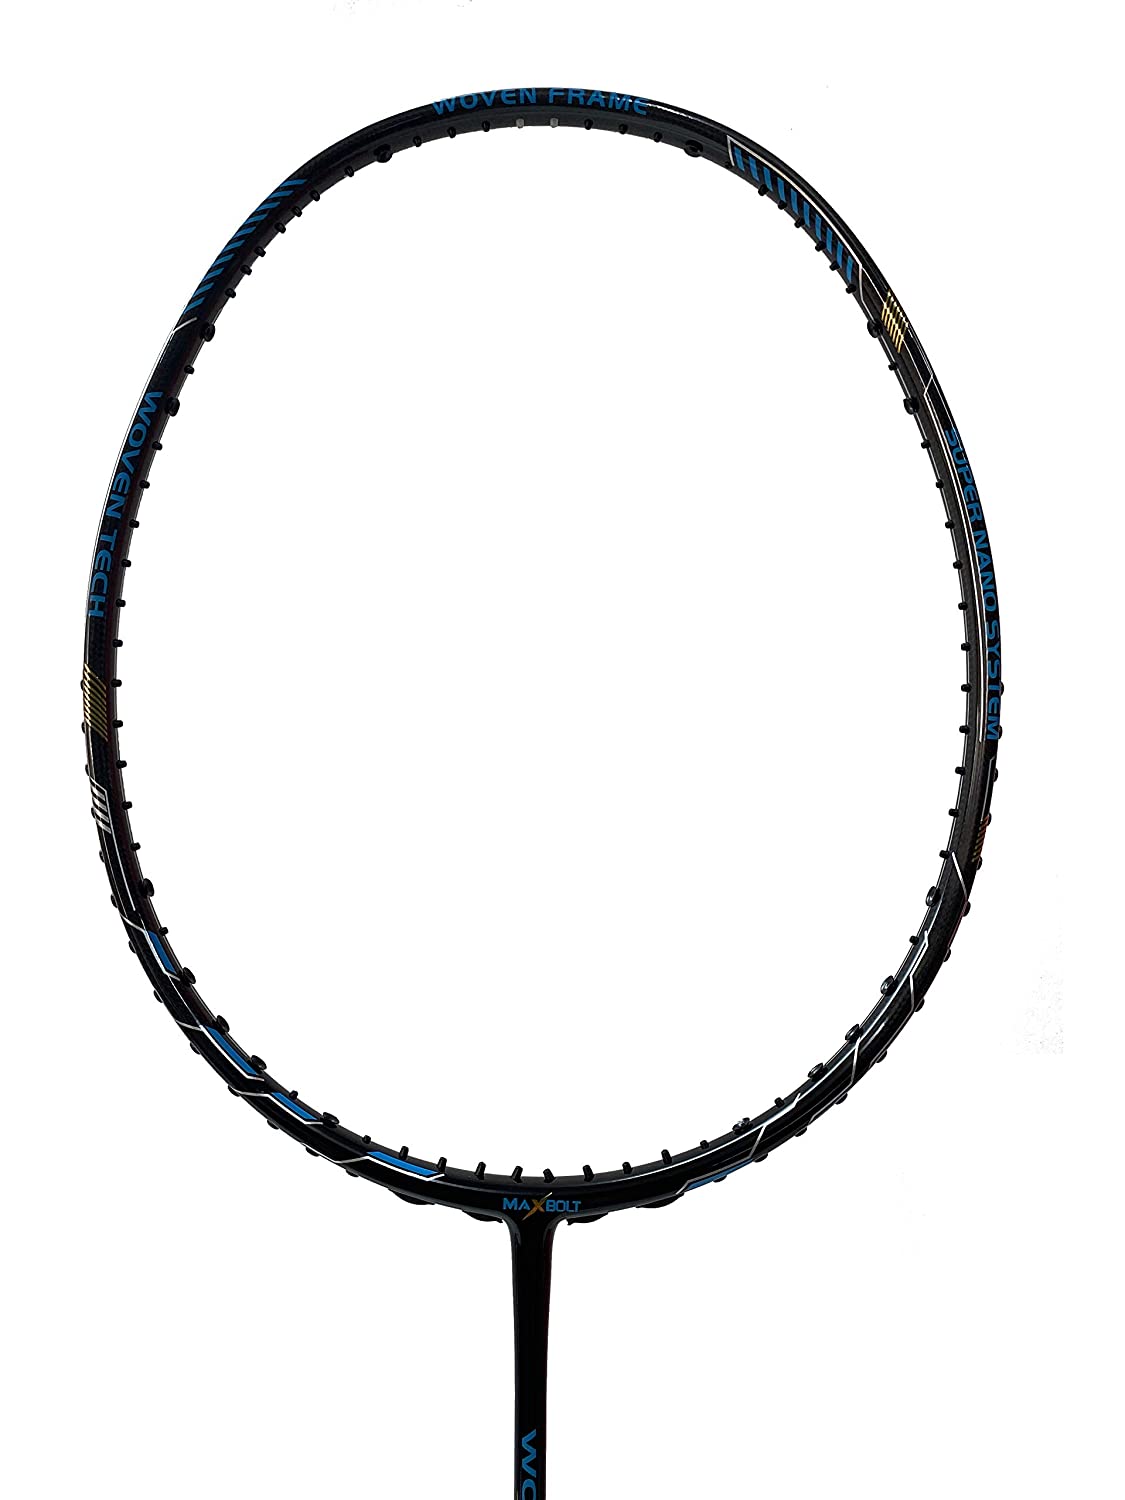 Maxbolt Woven Tech 60 Badminton Racket - Black/Blue